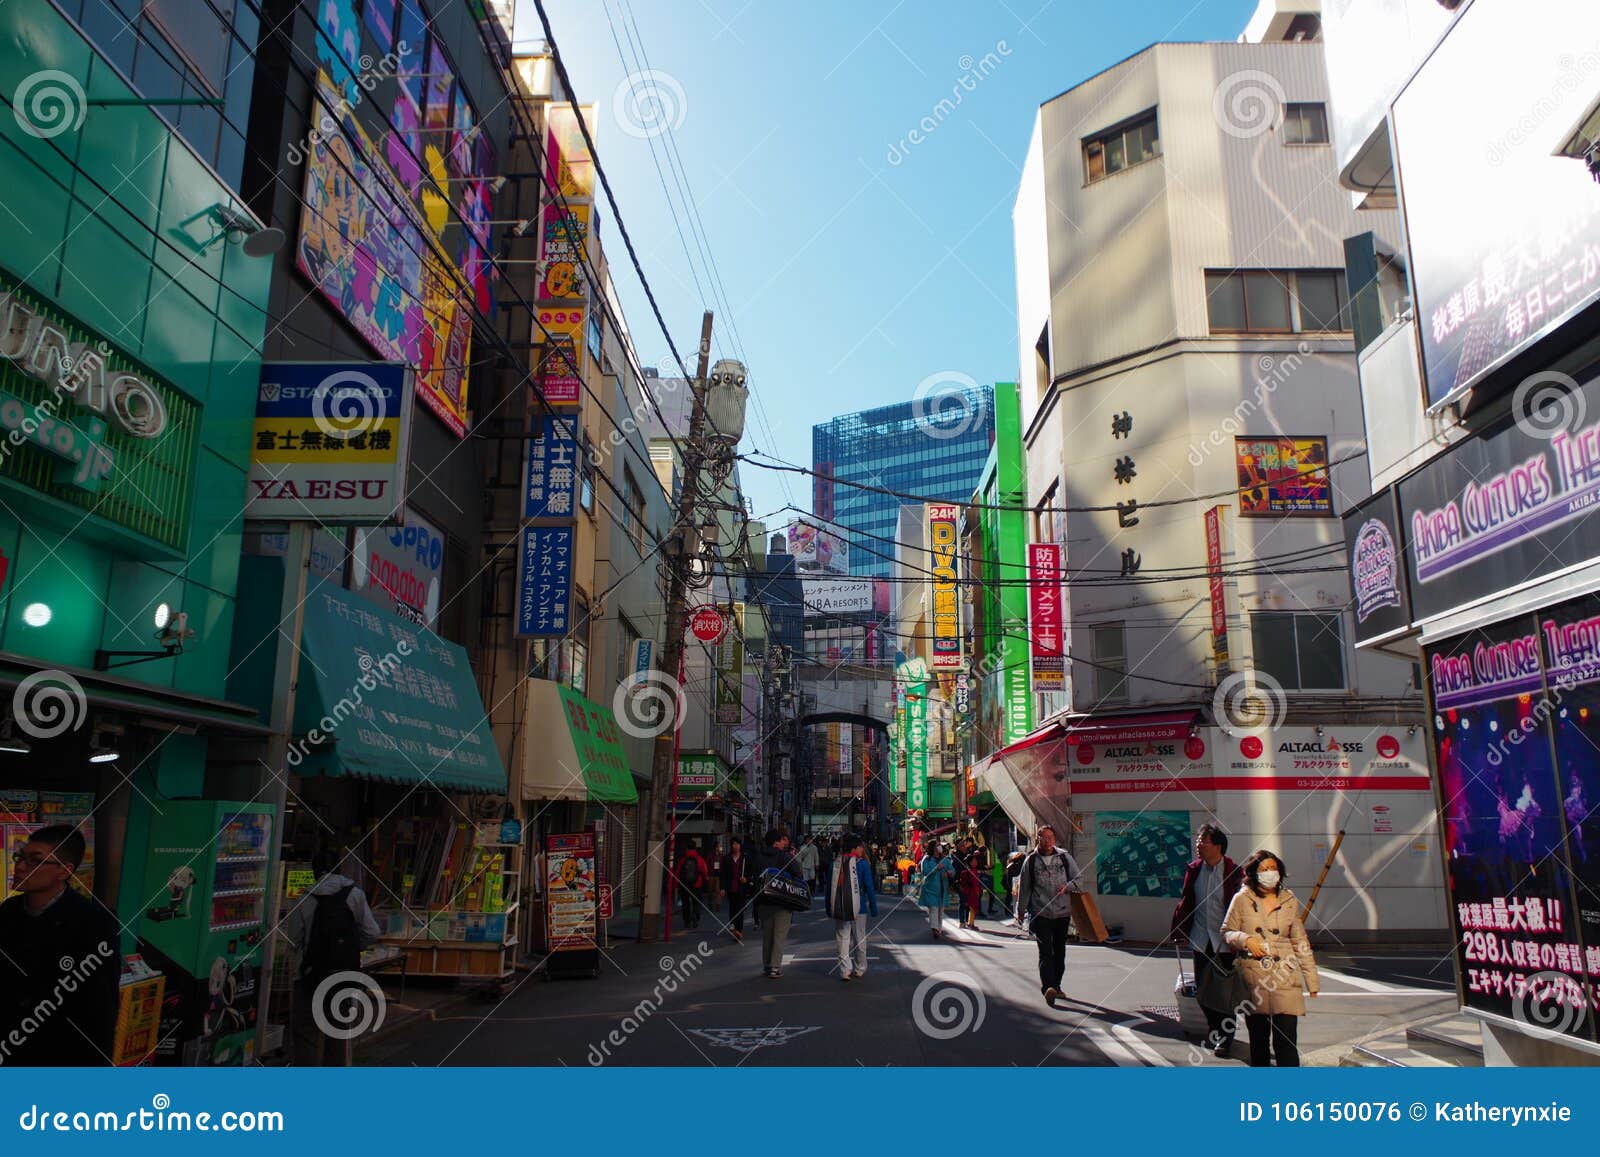 colourful buildings in akihabara | Tokyo, Colourful buildings, Akihabara